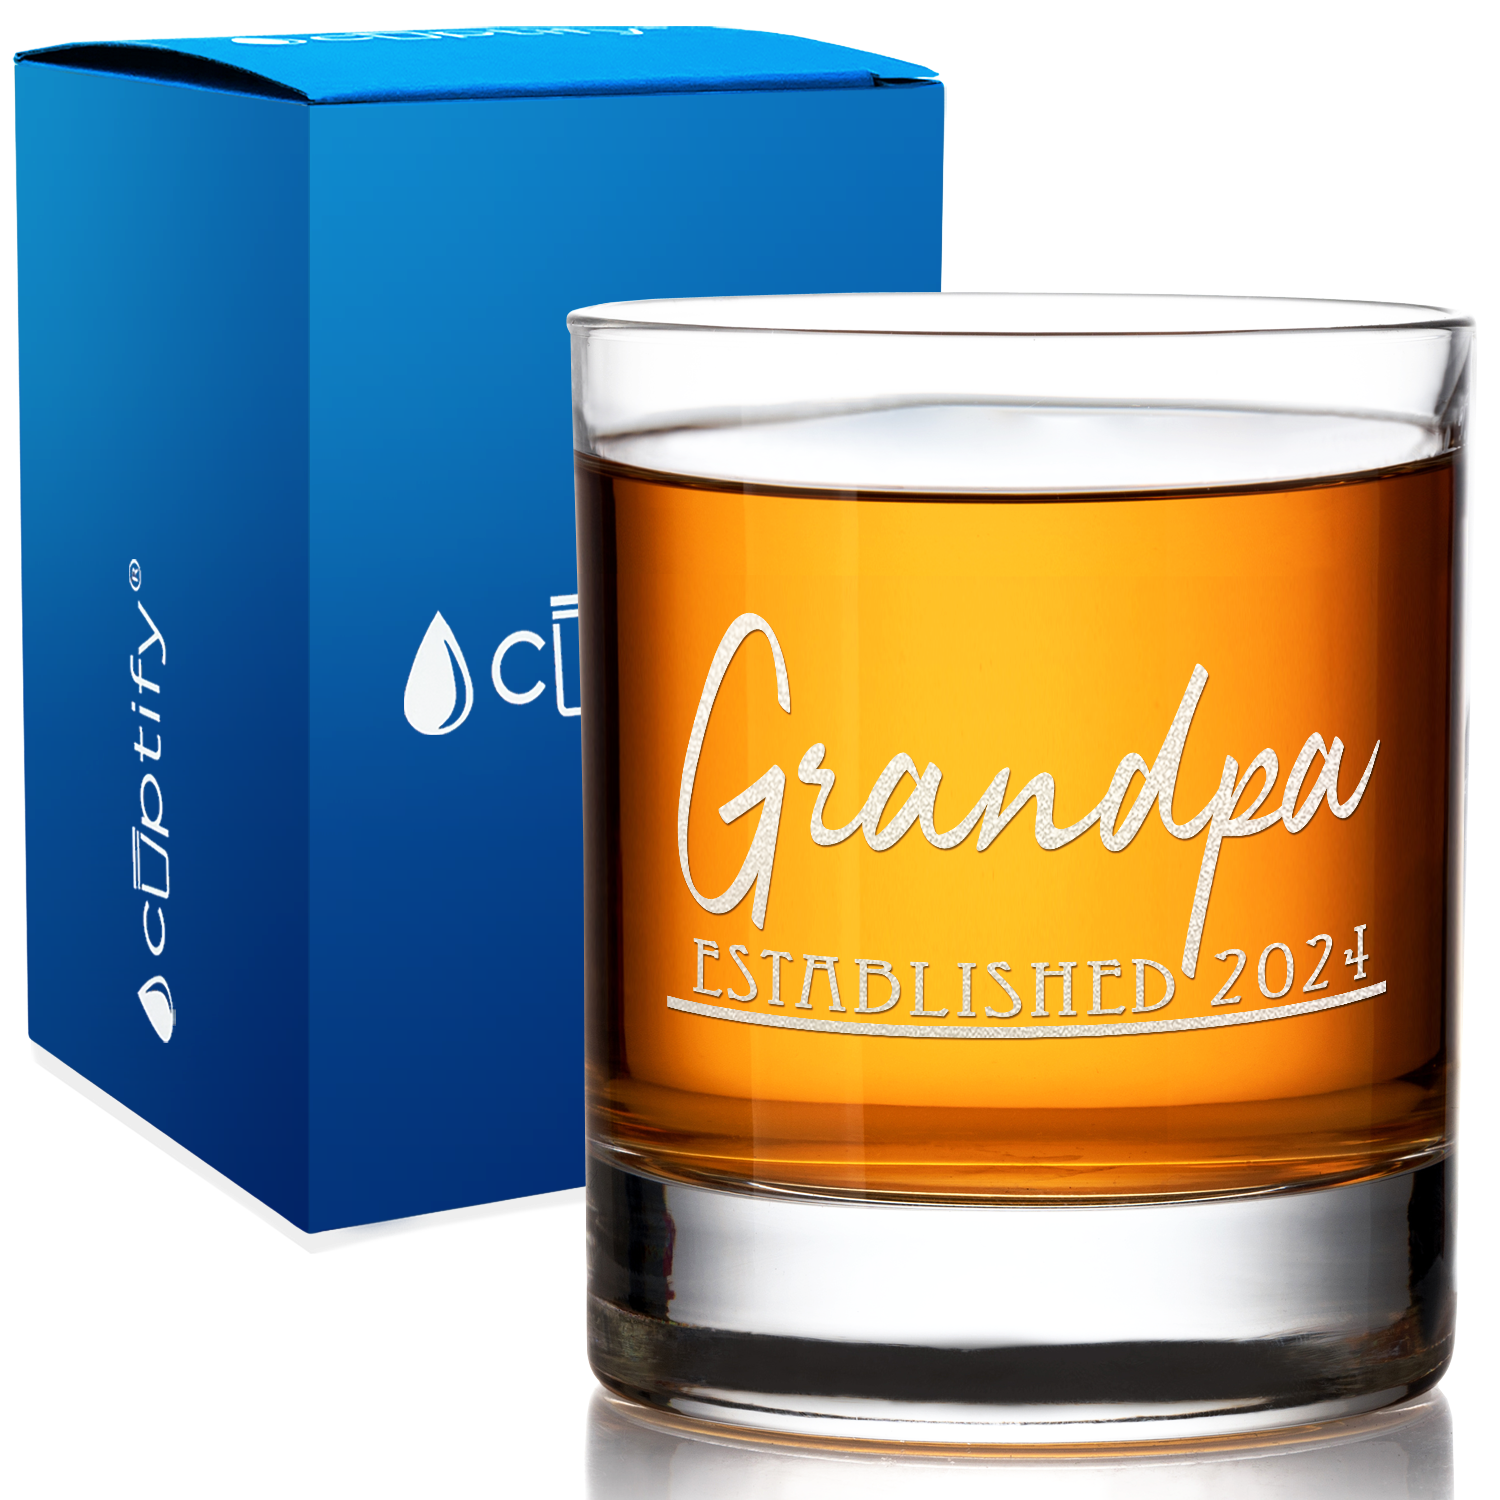 Grandpa Established Customized on 10.25oz Whiskey Glass